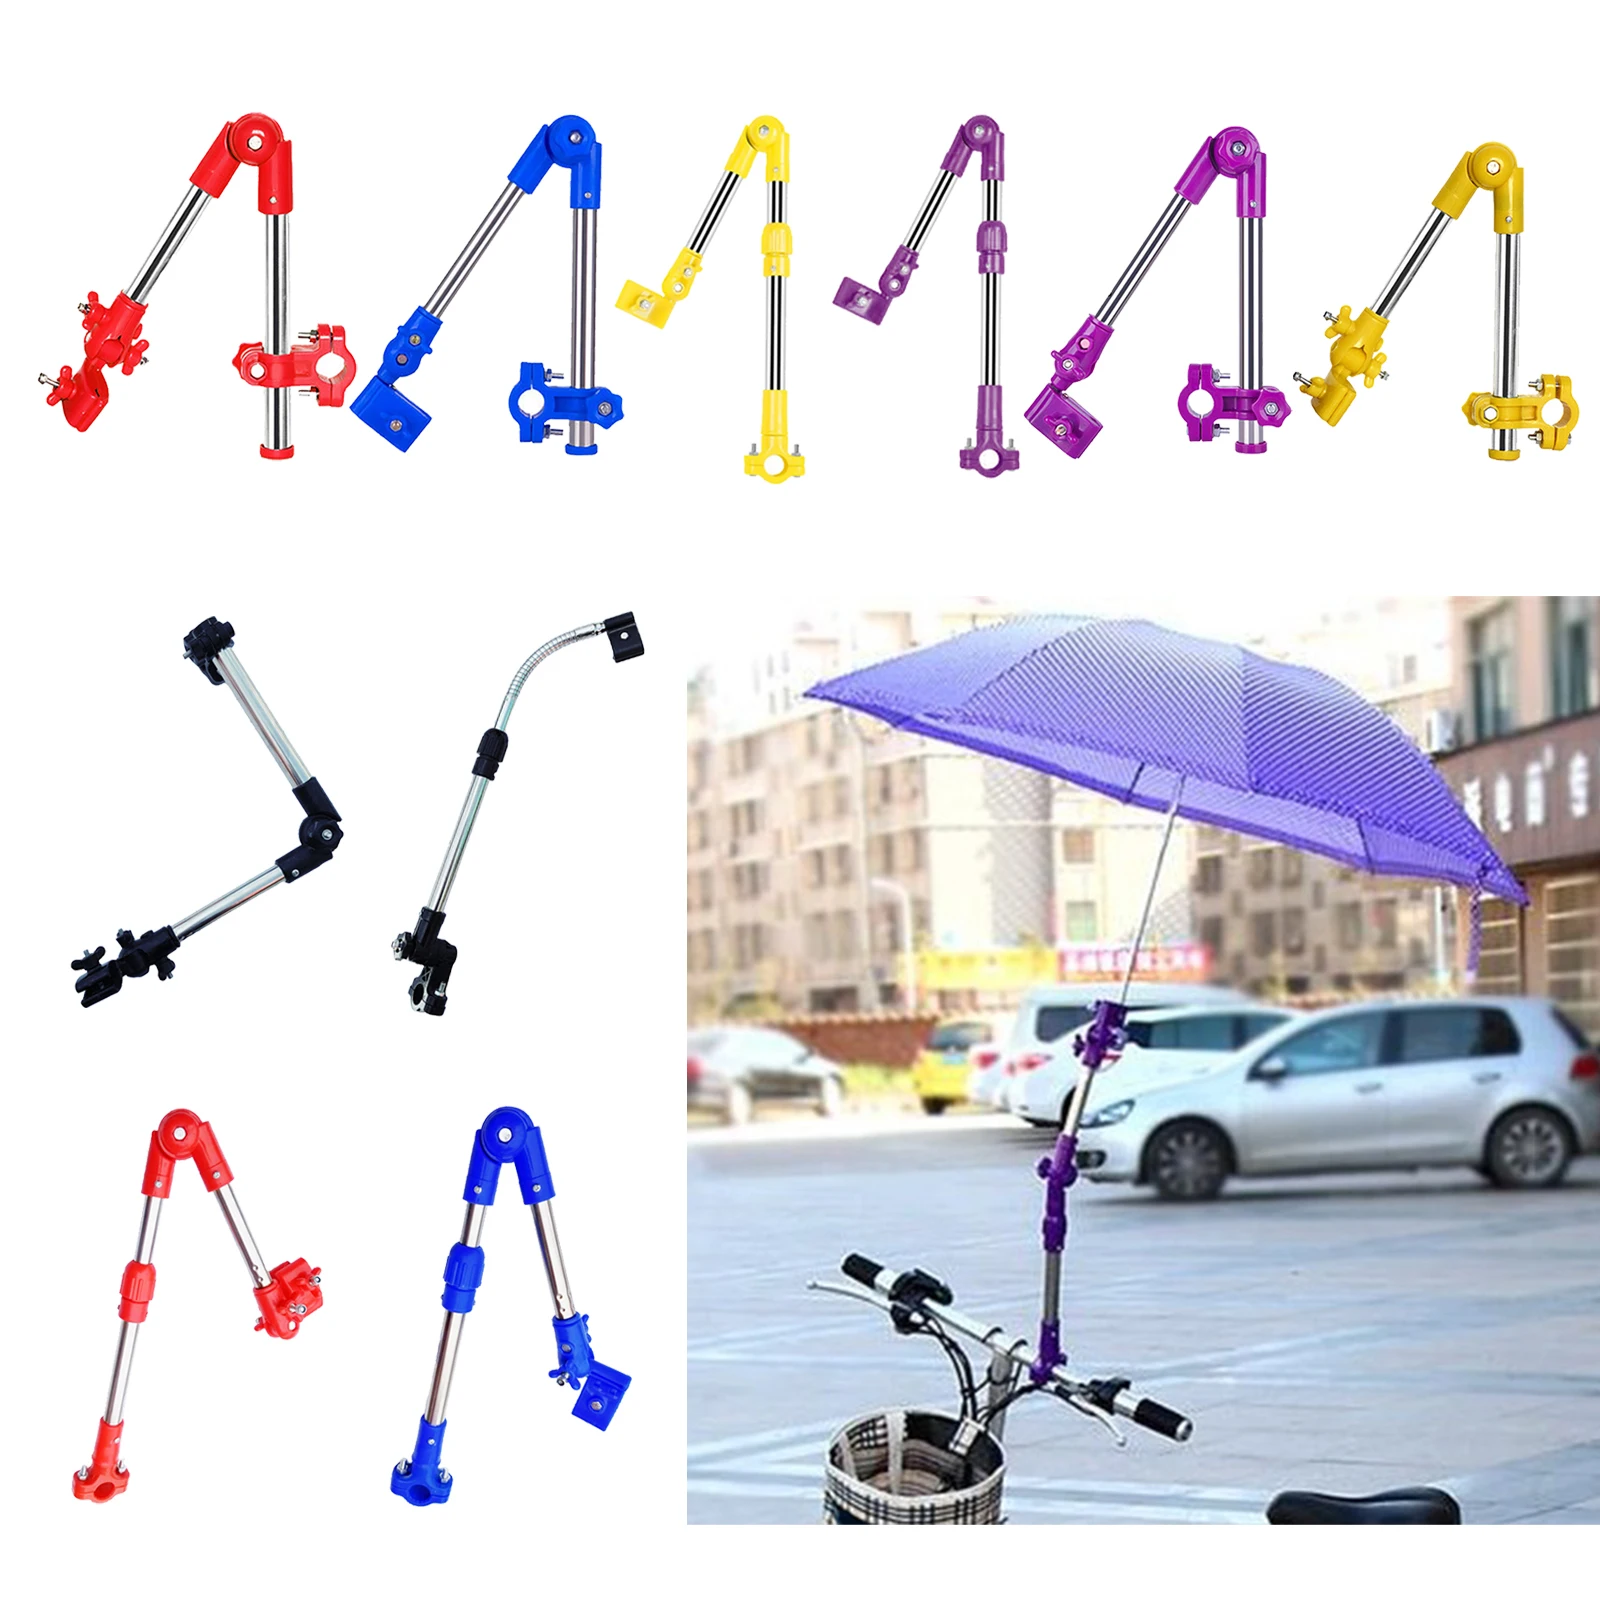 Stainless Steel Umbrella Stand Wheelchair Bicycle Umbrella Connector Stroller Rain Gear Tool Umbrella Holder Mount